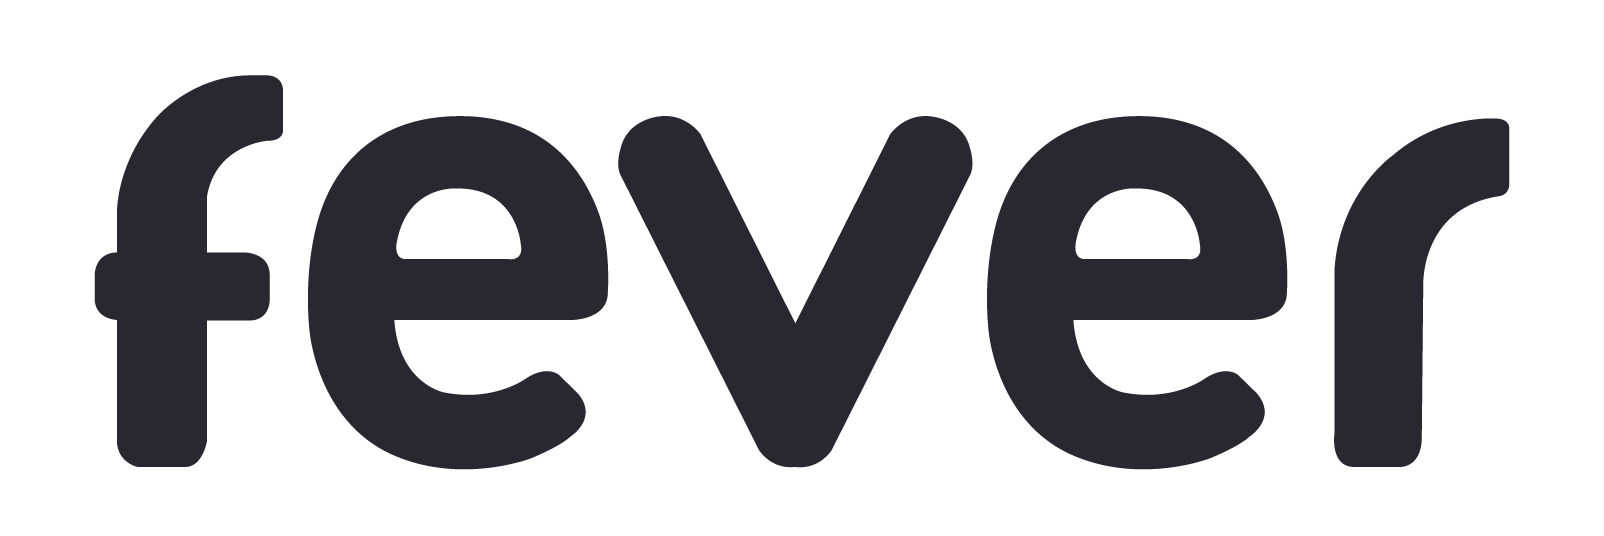 Fever Logo - Job offers in Fever startup in Europe